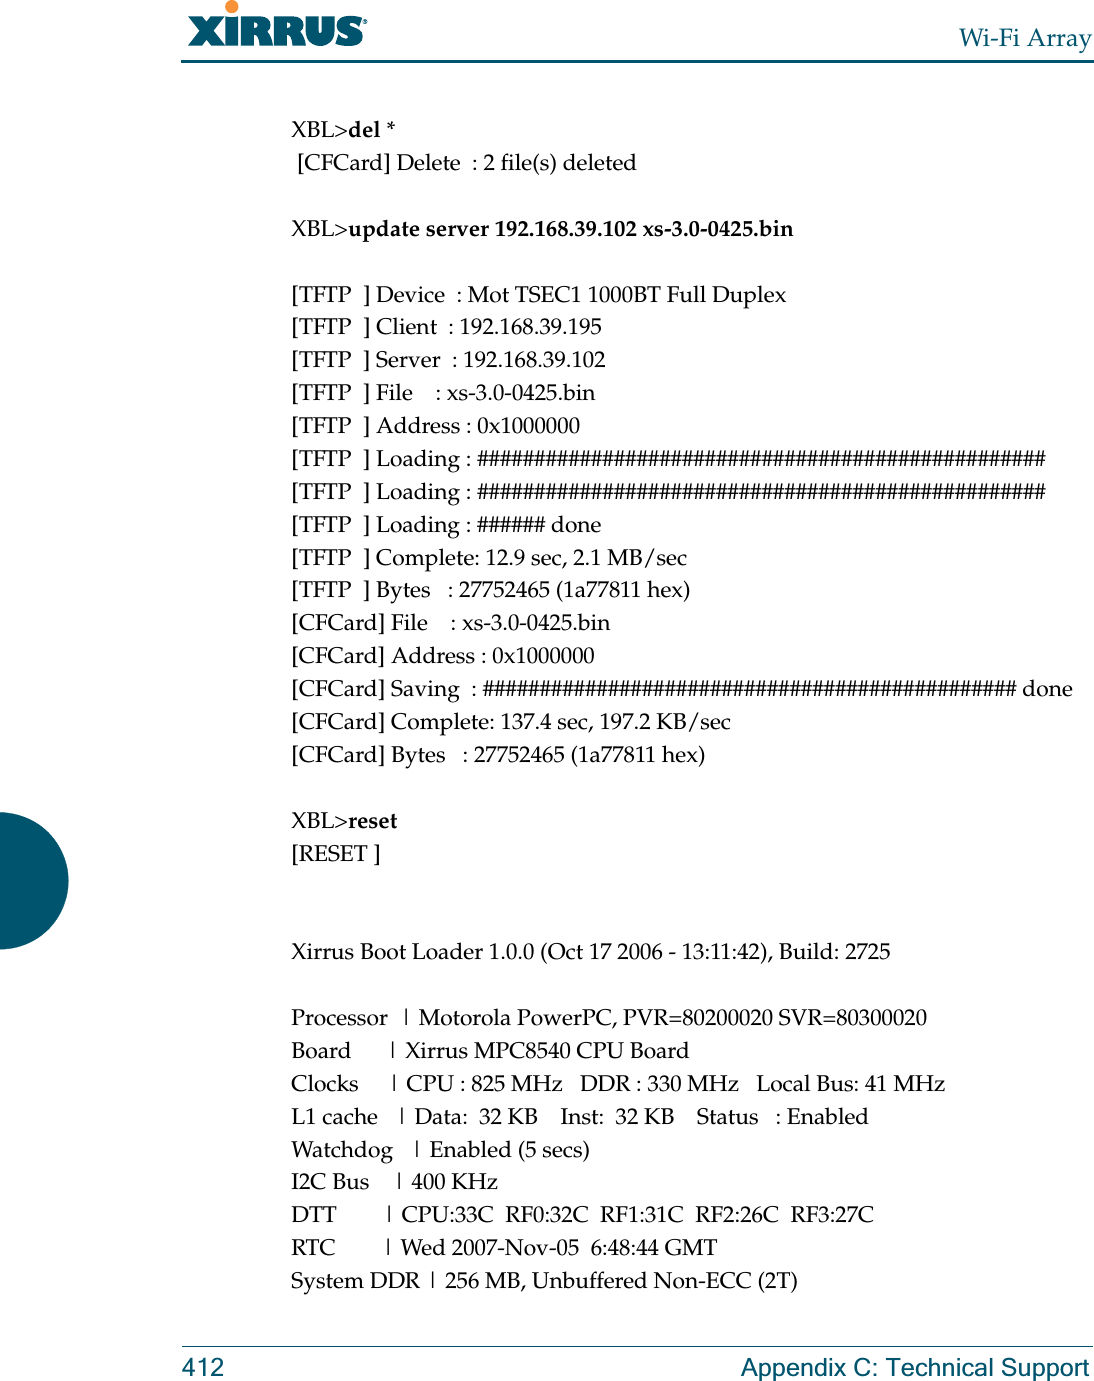 Wi-Fi Array412 Appendix C: Technical SupportXBL&gt;del * [CFCard] Delete  : 2 file(s) deletedXBL&gt;update server 192.168.39.102 xs-3.0-0425.bin[TFTP  ] Device  : Mot TSEC1 1000BT Full Duplex[TFTP  ] Client  : 192.168.39.195[TFTP  ] Server  : 192.168.39.102[TFTP  ] File    : xs-3.0-0425.bin[TFTP  ] Address : 0x1000000[TFTP  ] Loading : ##################################################[TFTP  ] Loading : ##################################################[TFTP  ] Loading : ###### done[TFTP  ] Complete: 12.9 sec, 2.1 MB/sec[TFTP  ] Bytes   : 27752465 (1a77811 hex)[CFCard] File    : xs-3.0-0425.bin[CFCard] Address : 0x1000000[CFCard] Saving  : ############################################### done[CFCard] Complete: 137.4 sec, 197.2 KB/sec[CFCard] Bytes   : 27752465 (1a77811 hex)XBL&gt;reset[RESET ]Xirrus Boot Loader 1.0.0 (Oct 17 2006 - 13:11:42), Build: 2725Processor  | Motorola PowerPC, PVR=80200020 SVR=80300020Board      | Xirrus MPC8540 CPU BoardClocks     | CPU : 825 MHz   DDR : 330 MHz   Local Bus: 41 MHzL1 cache   | Data:  32 KB    Inst:  32 KB    Status   : EnabledWatchdog   | Enabled (5 secs)I2C Bus    | 400 KHzDTT        | CPU:33C  RF0:32C  RF1:31C  RF2:26C  RF3:27CRTC        | Wed 2007-Nov-05  6:48:44 GMTSystem DDR | 256 MB, Unbuffered Non-ECC (2T)